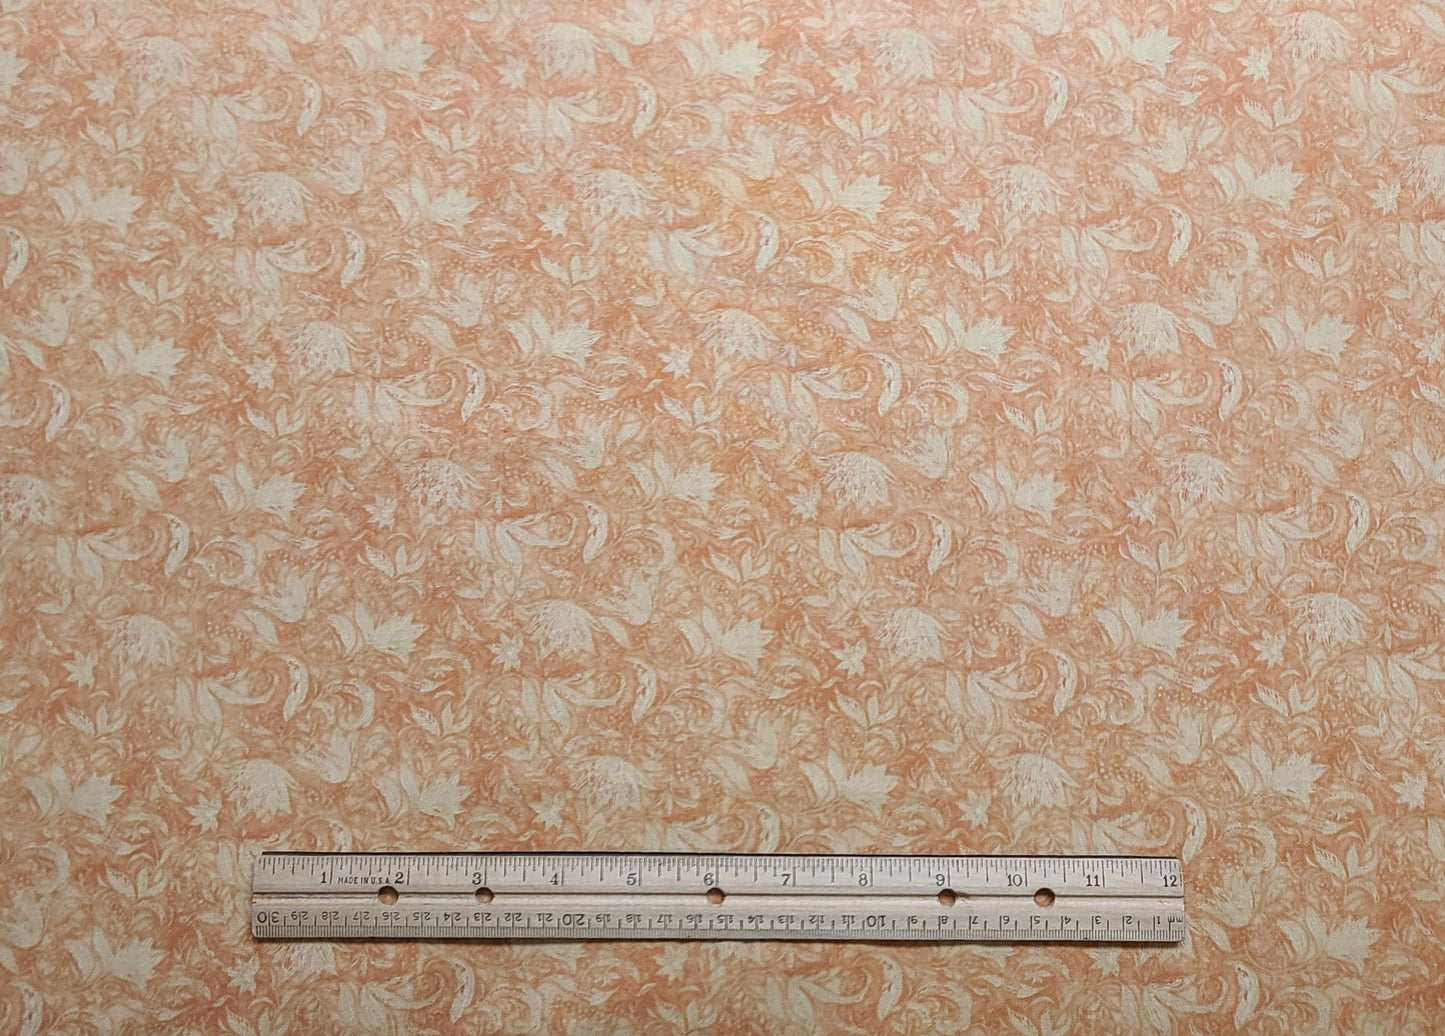 CP39802 Victorian Garden Texture Peach Susan Winget - Peach and Cream Flower Print Fabric